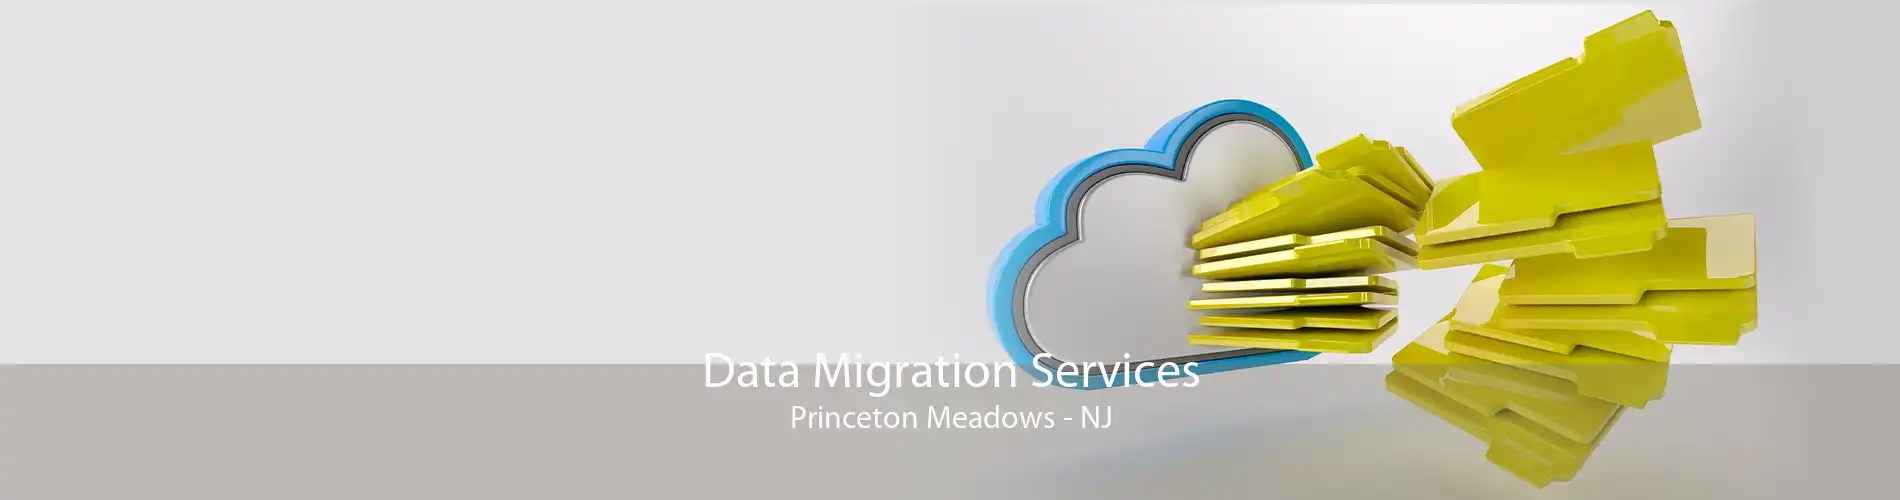 Data Migration Services Princeton Meadows - NJ